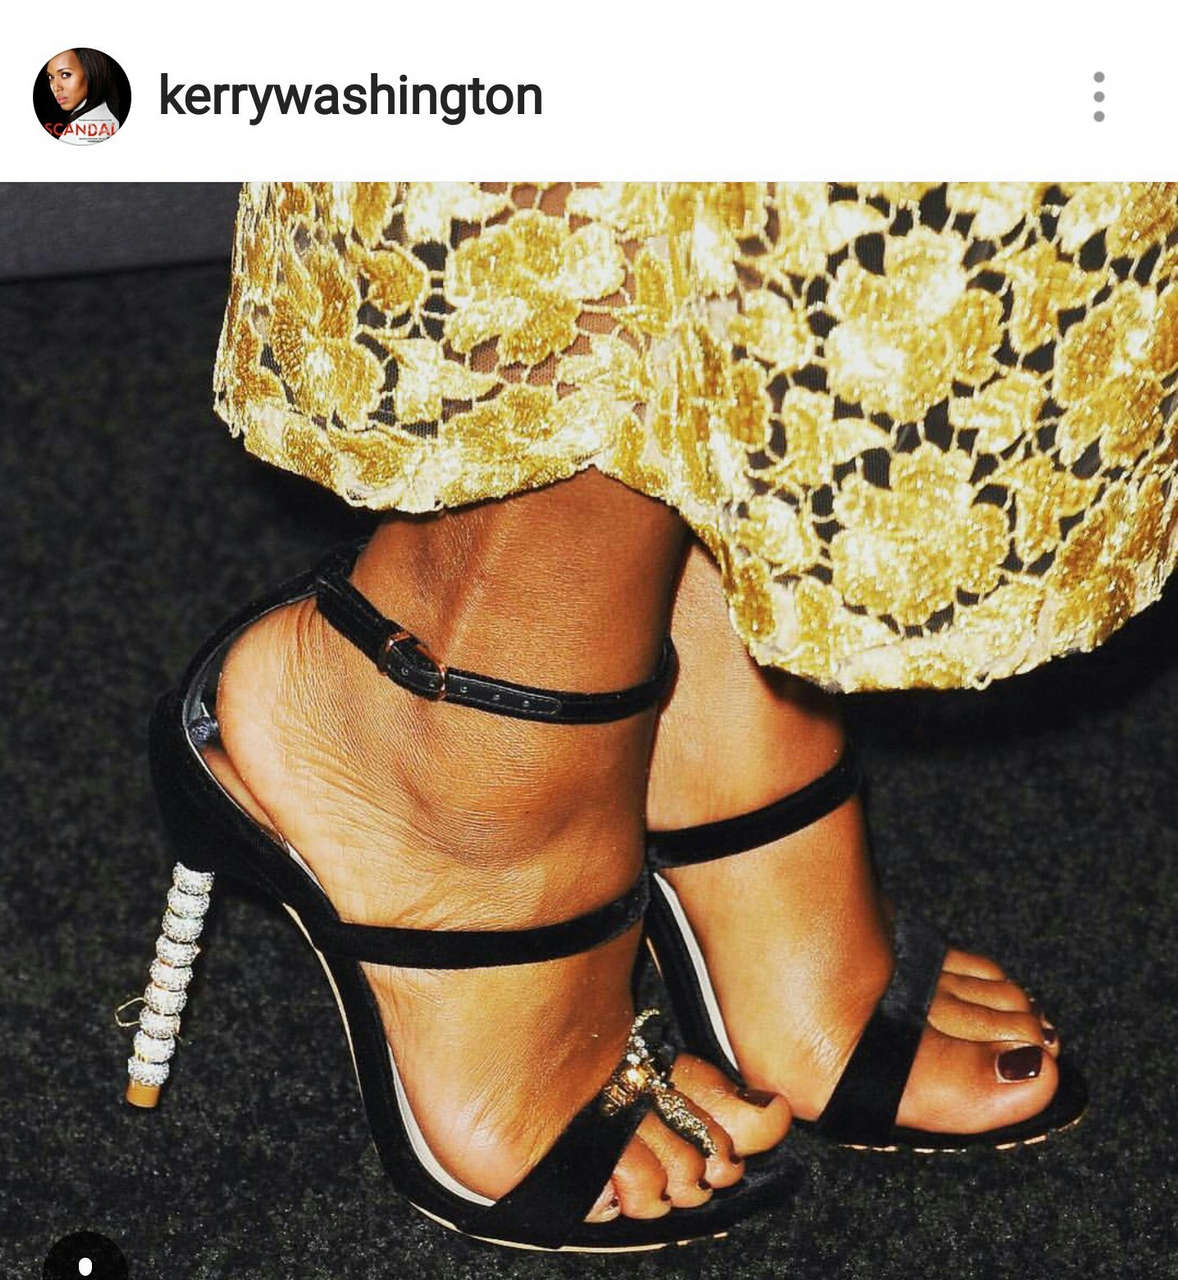 Kerry Washington Feet